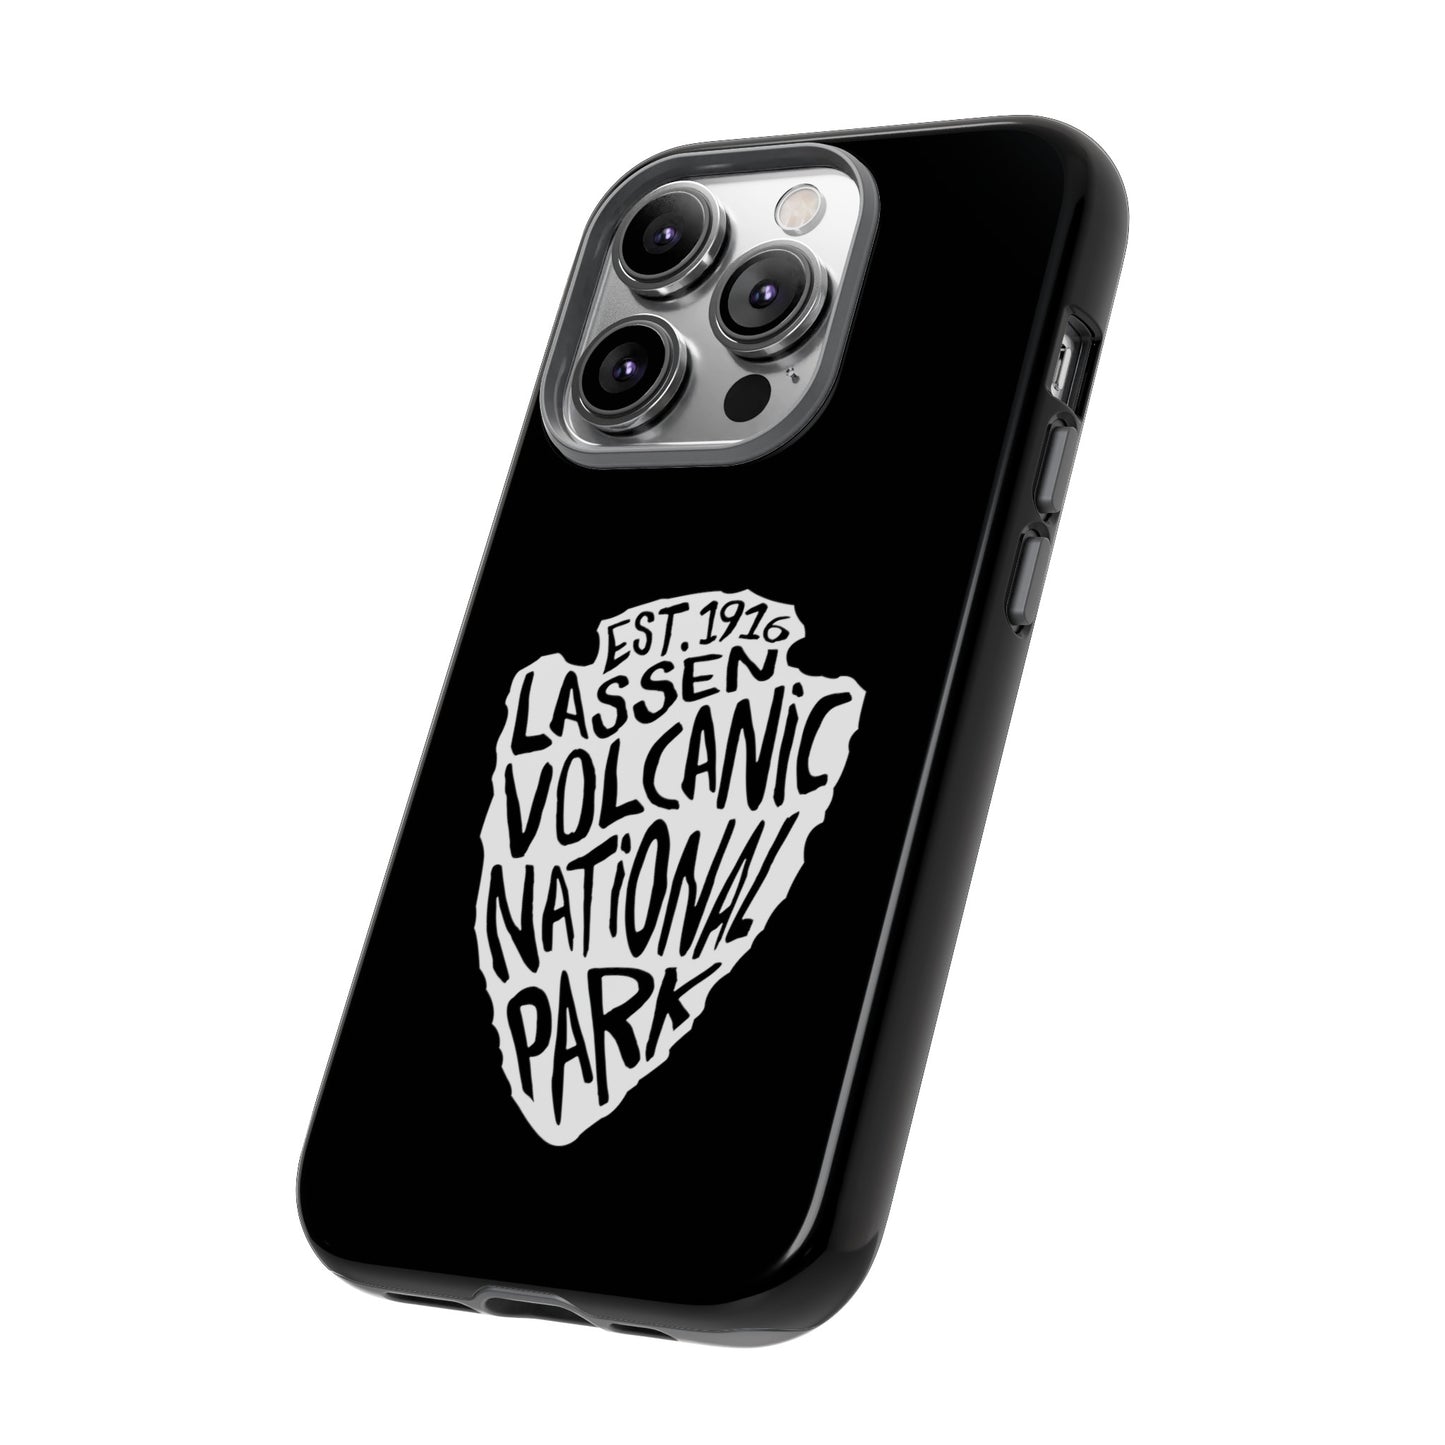 Lassen Volcanic National Park iPhone Case - Arrowhead Design